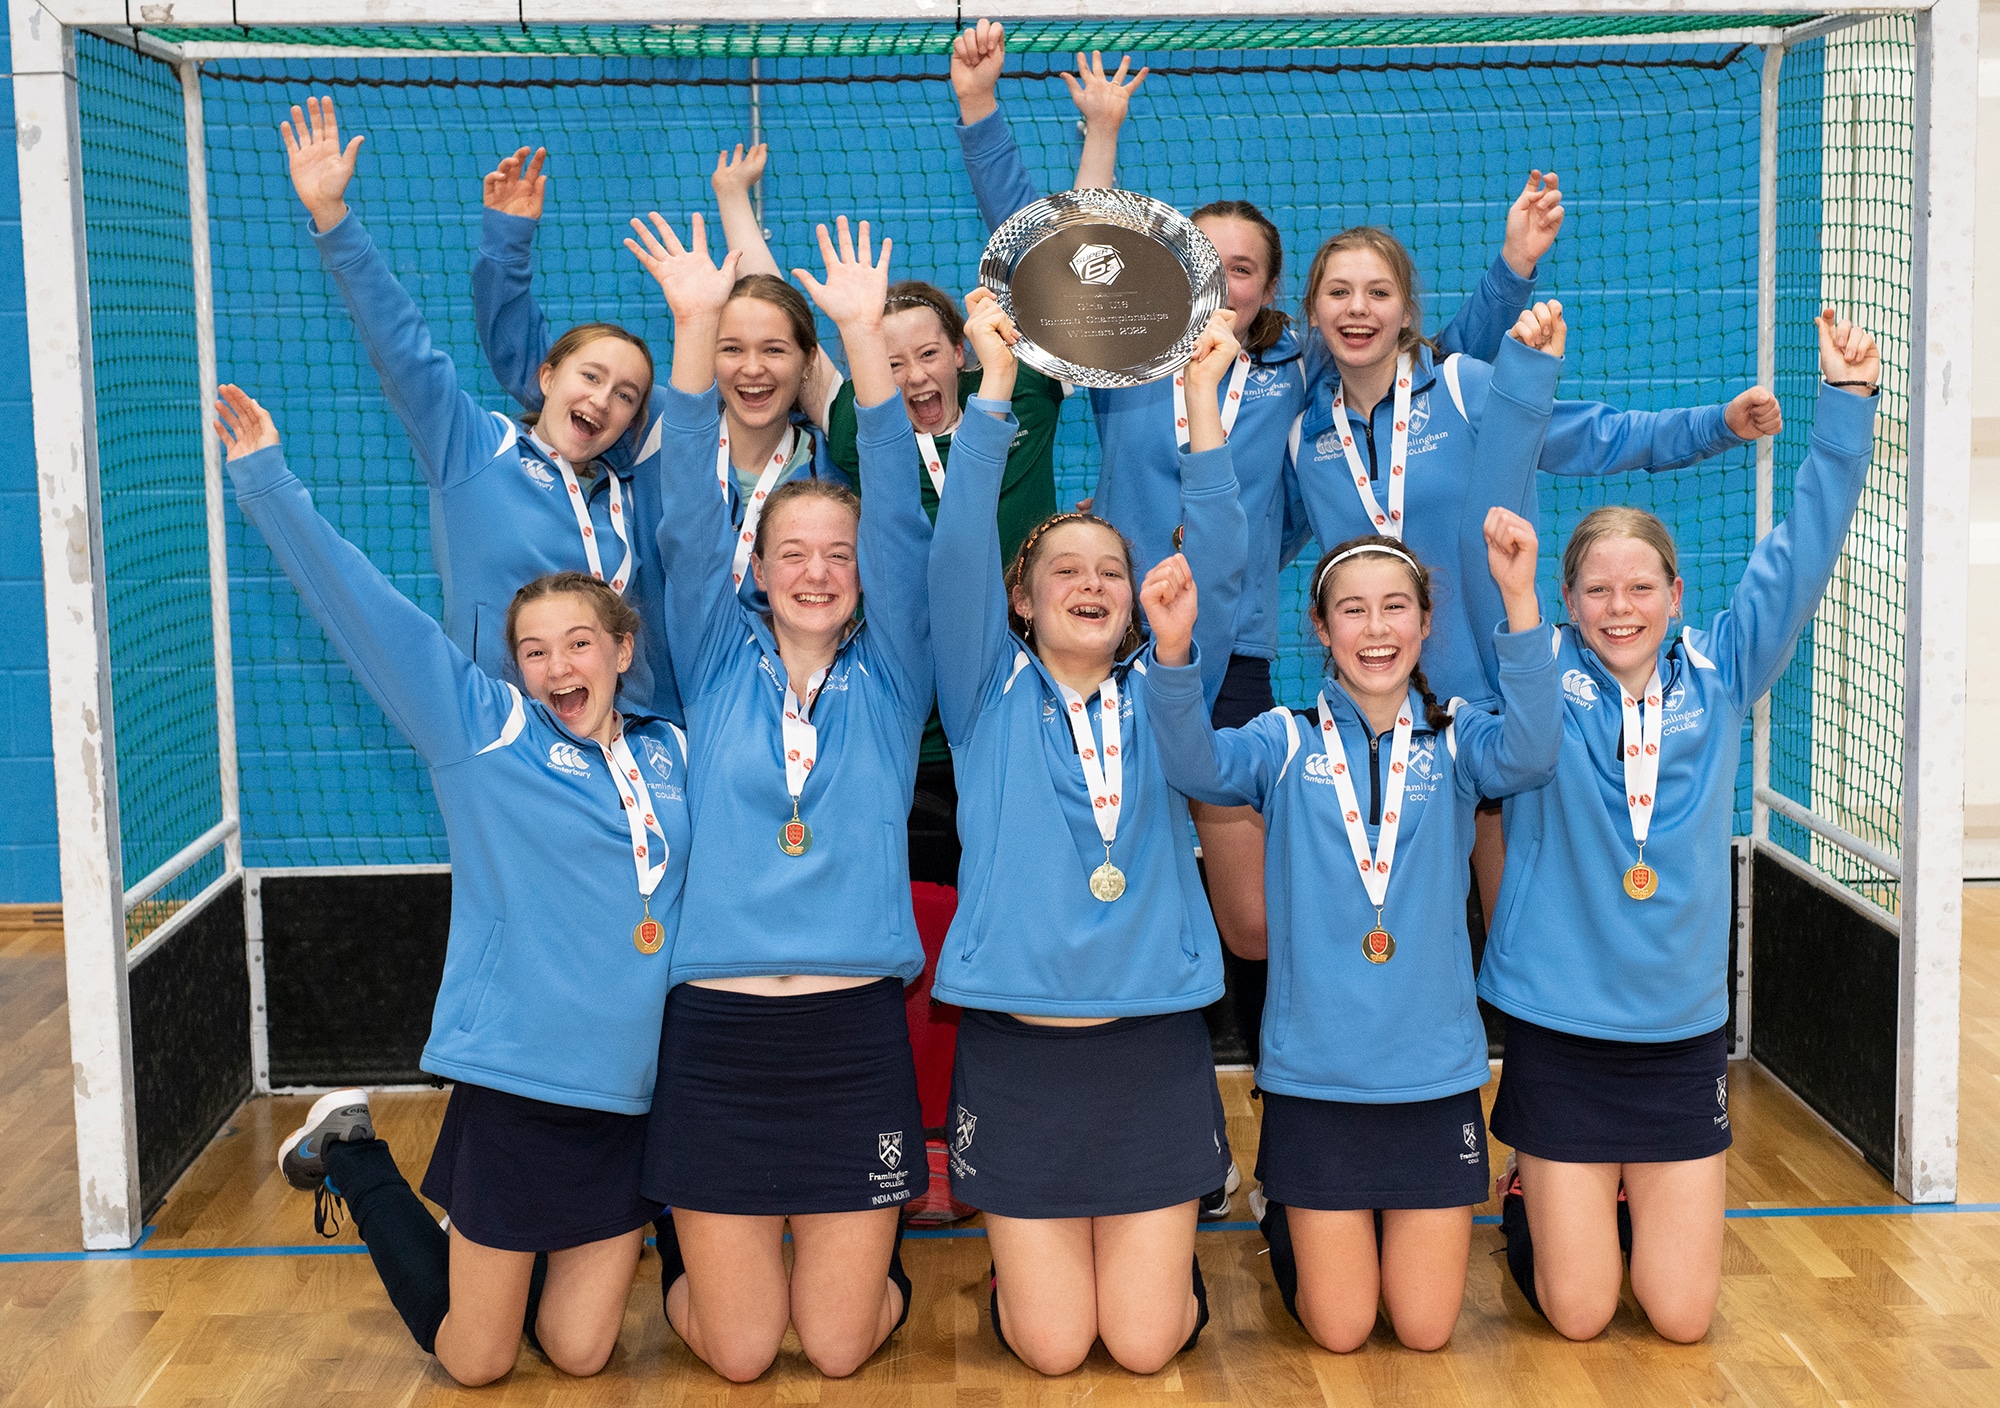 U16 girls take England Indoor Hockey Finals trophy with U18s also